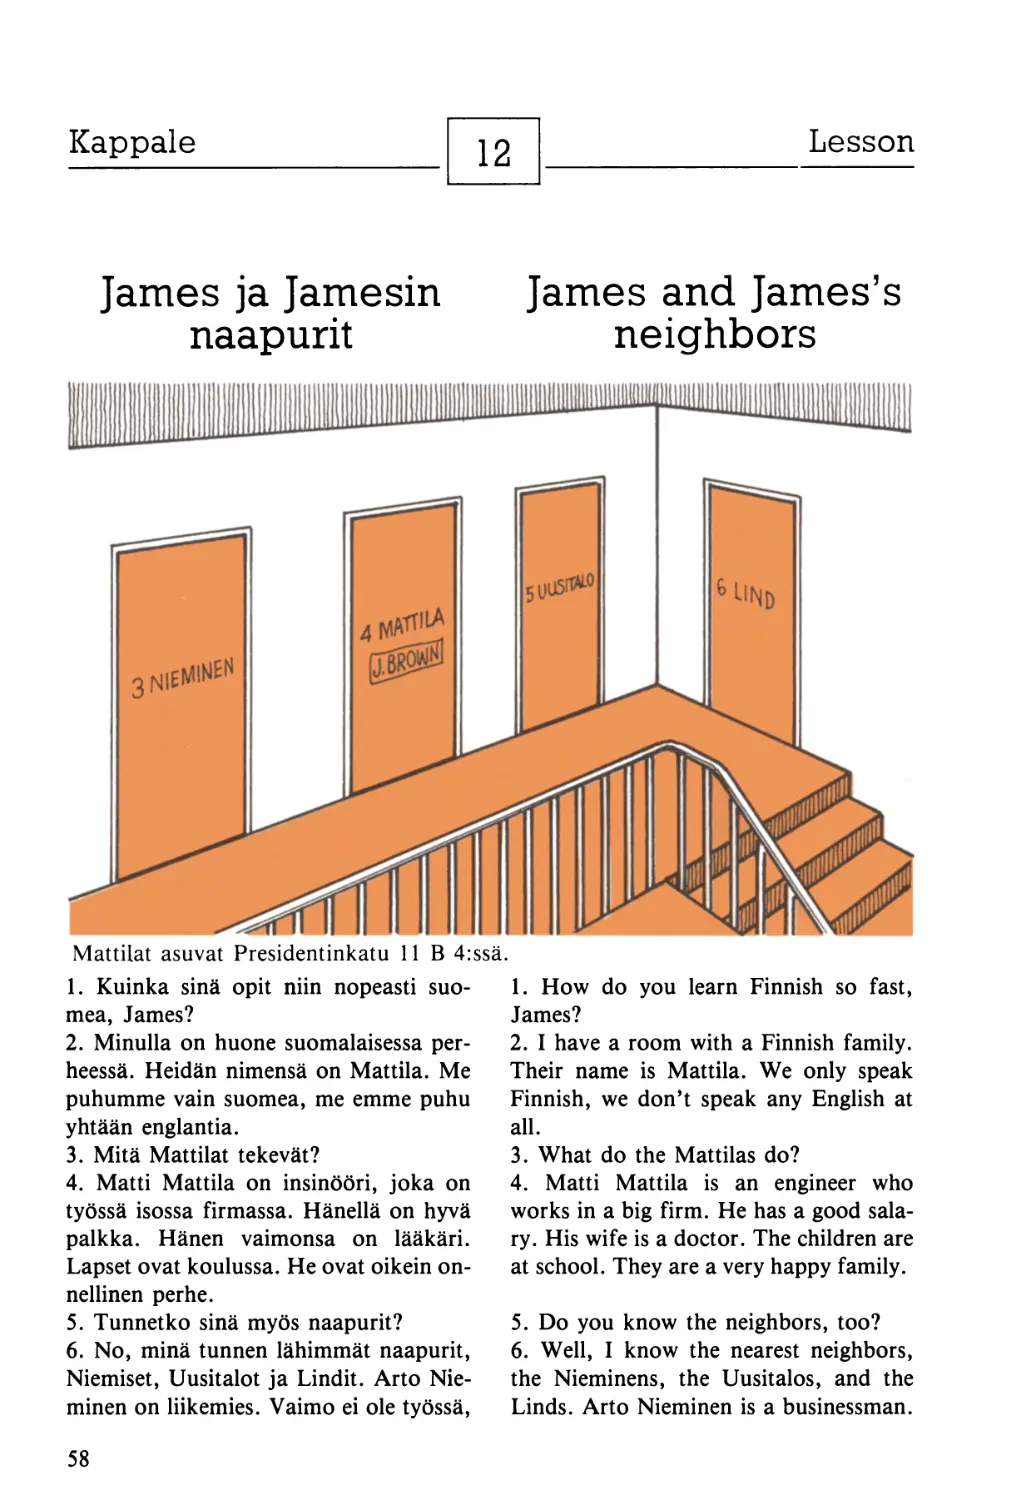 12. James ja Jamesin naapurit — James and James’s neighbors